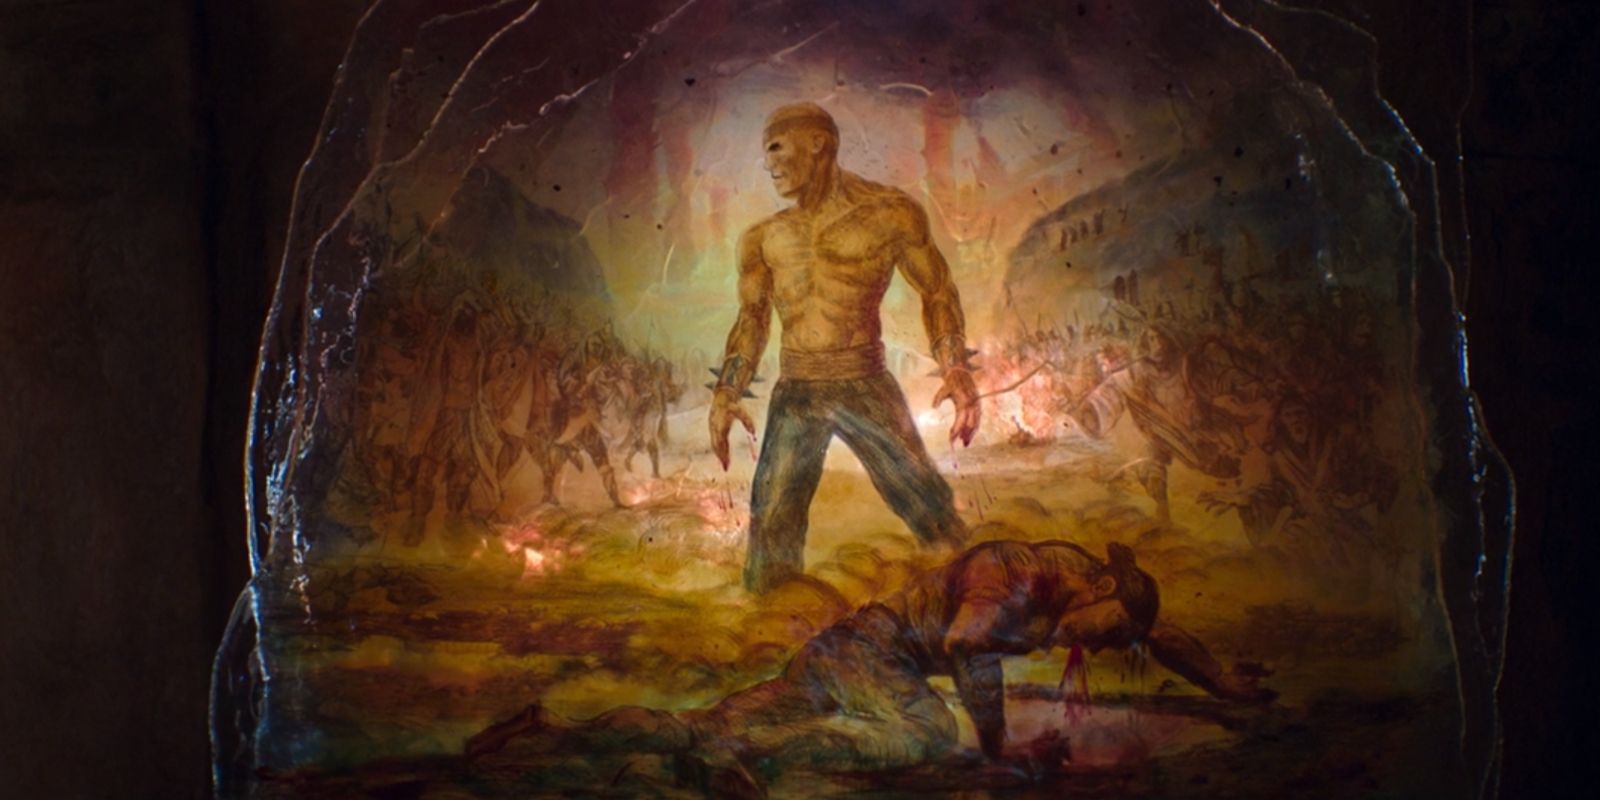 Mural of the Great Kung Lao in Mortal Kombat 2021